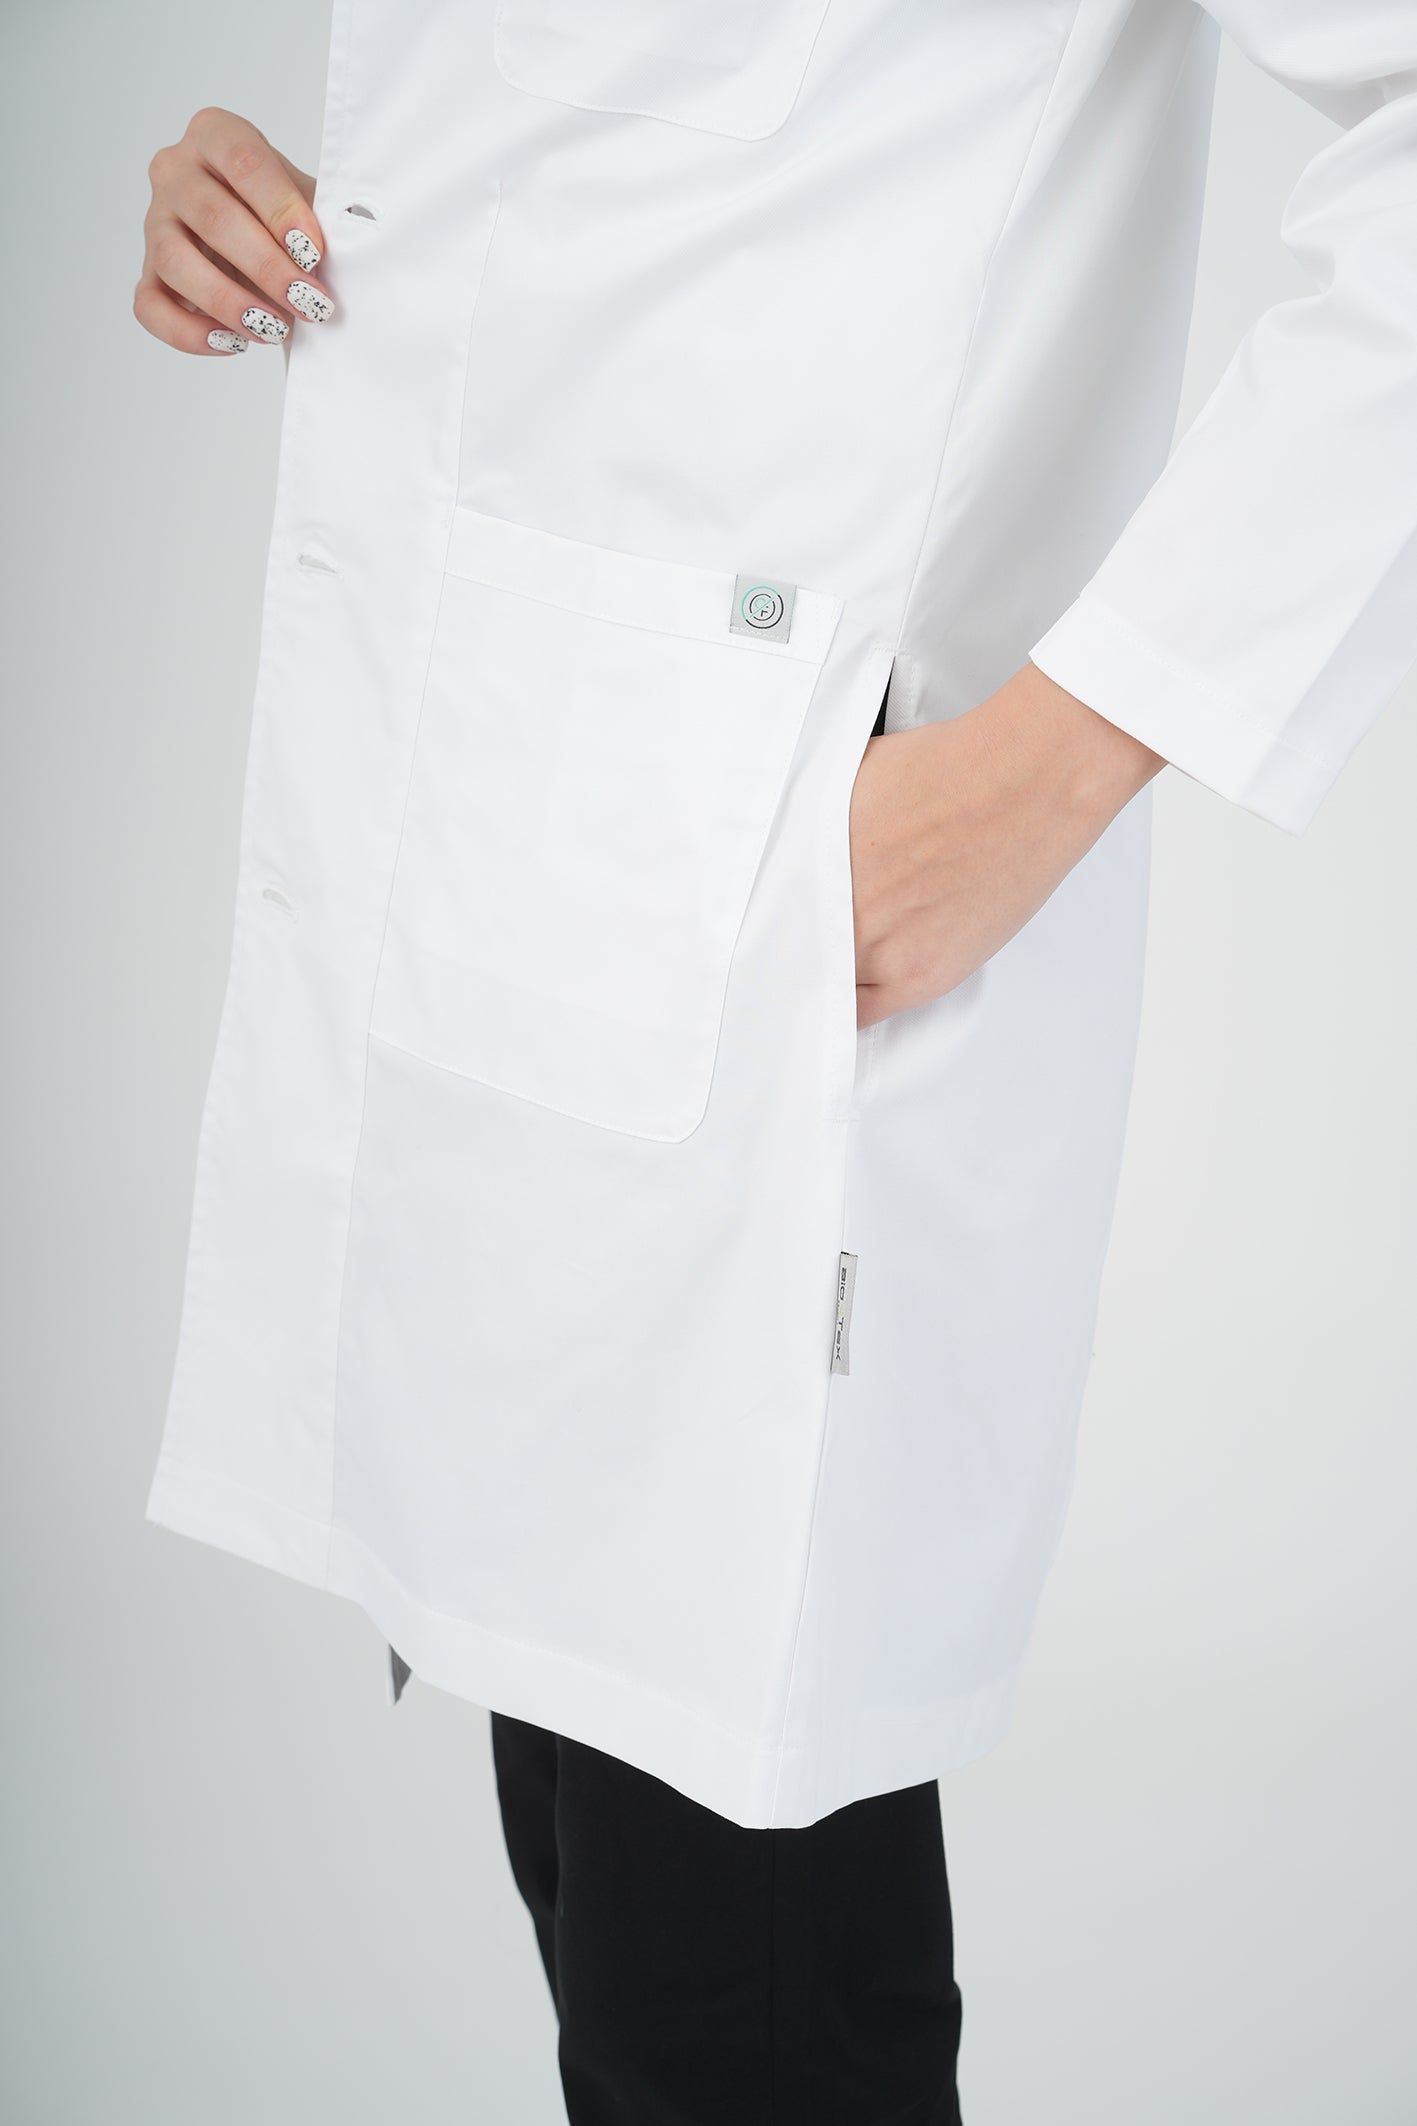 Women's BioNTex™ Easy Care Long Lab Coat